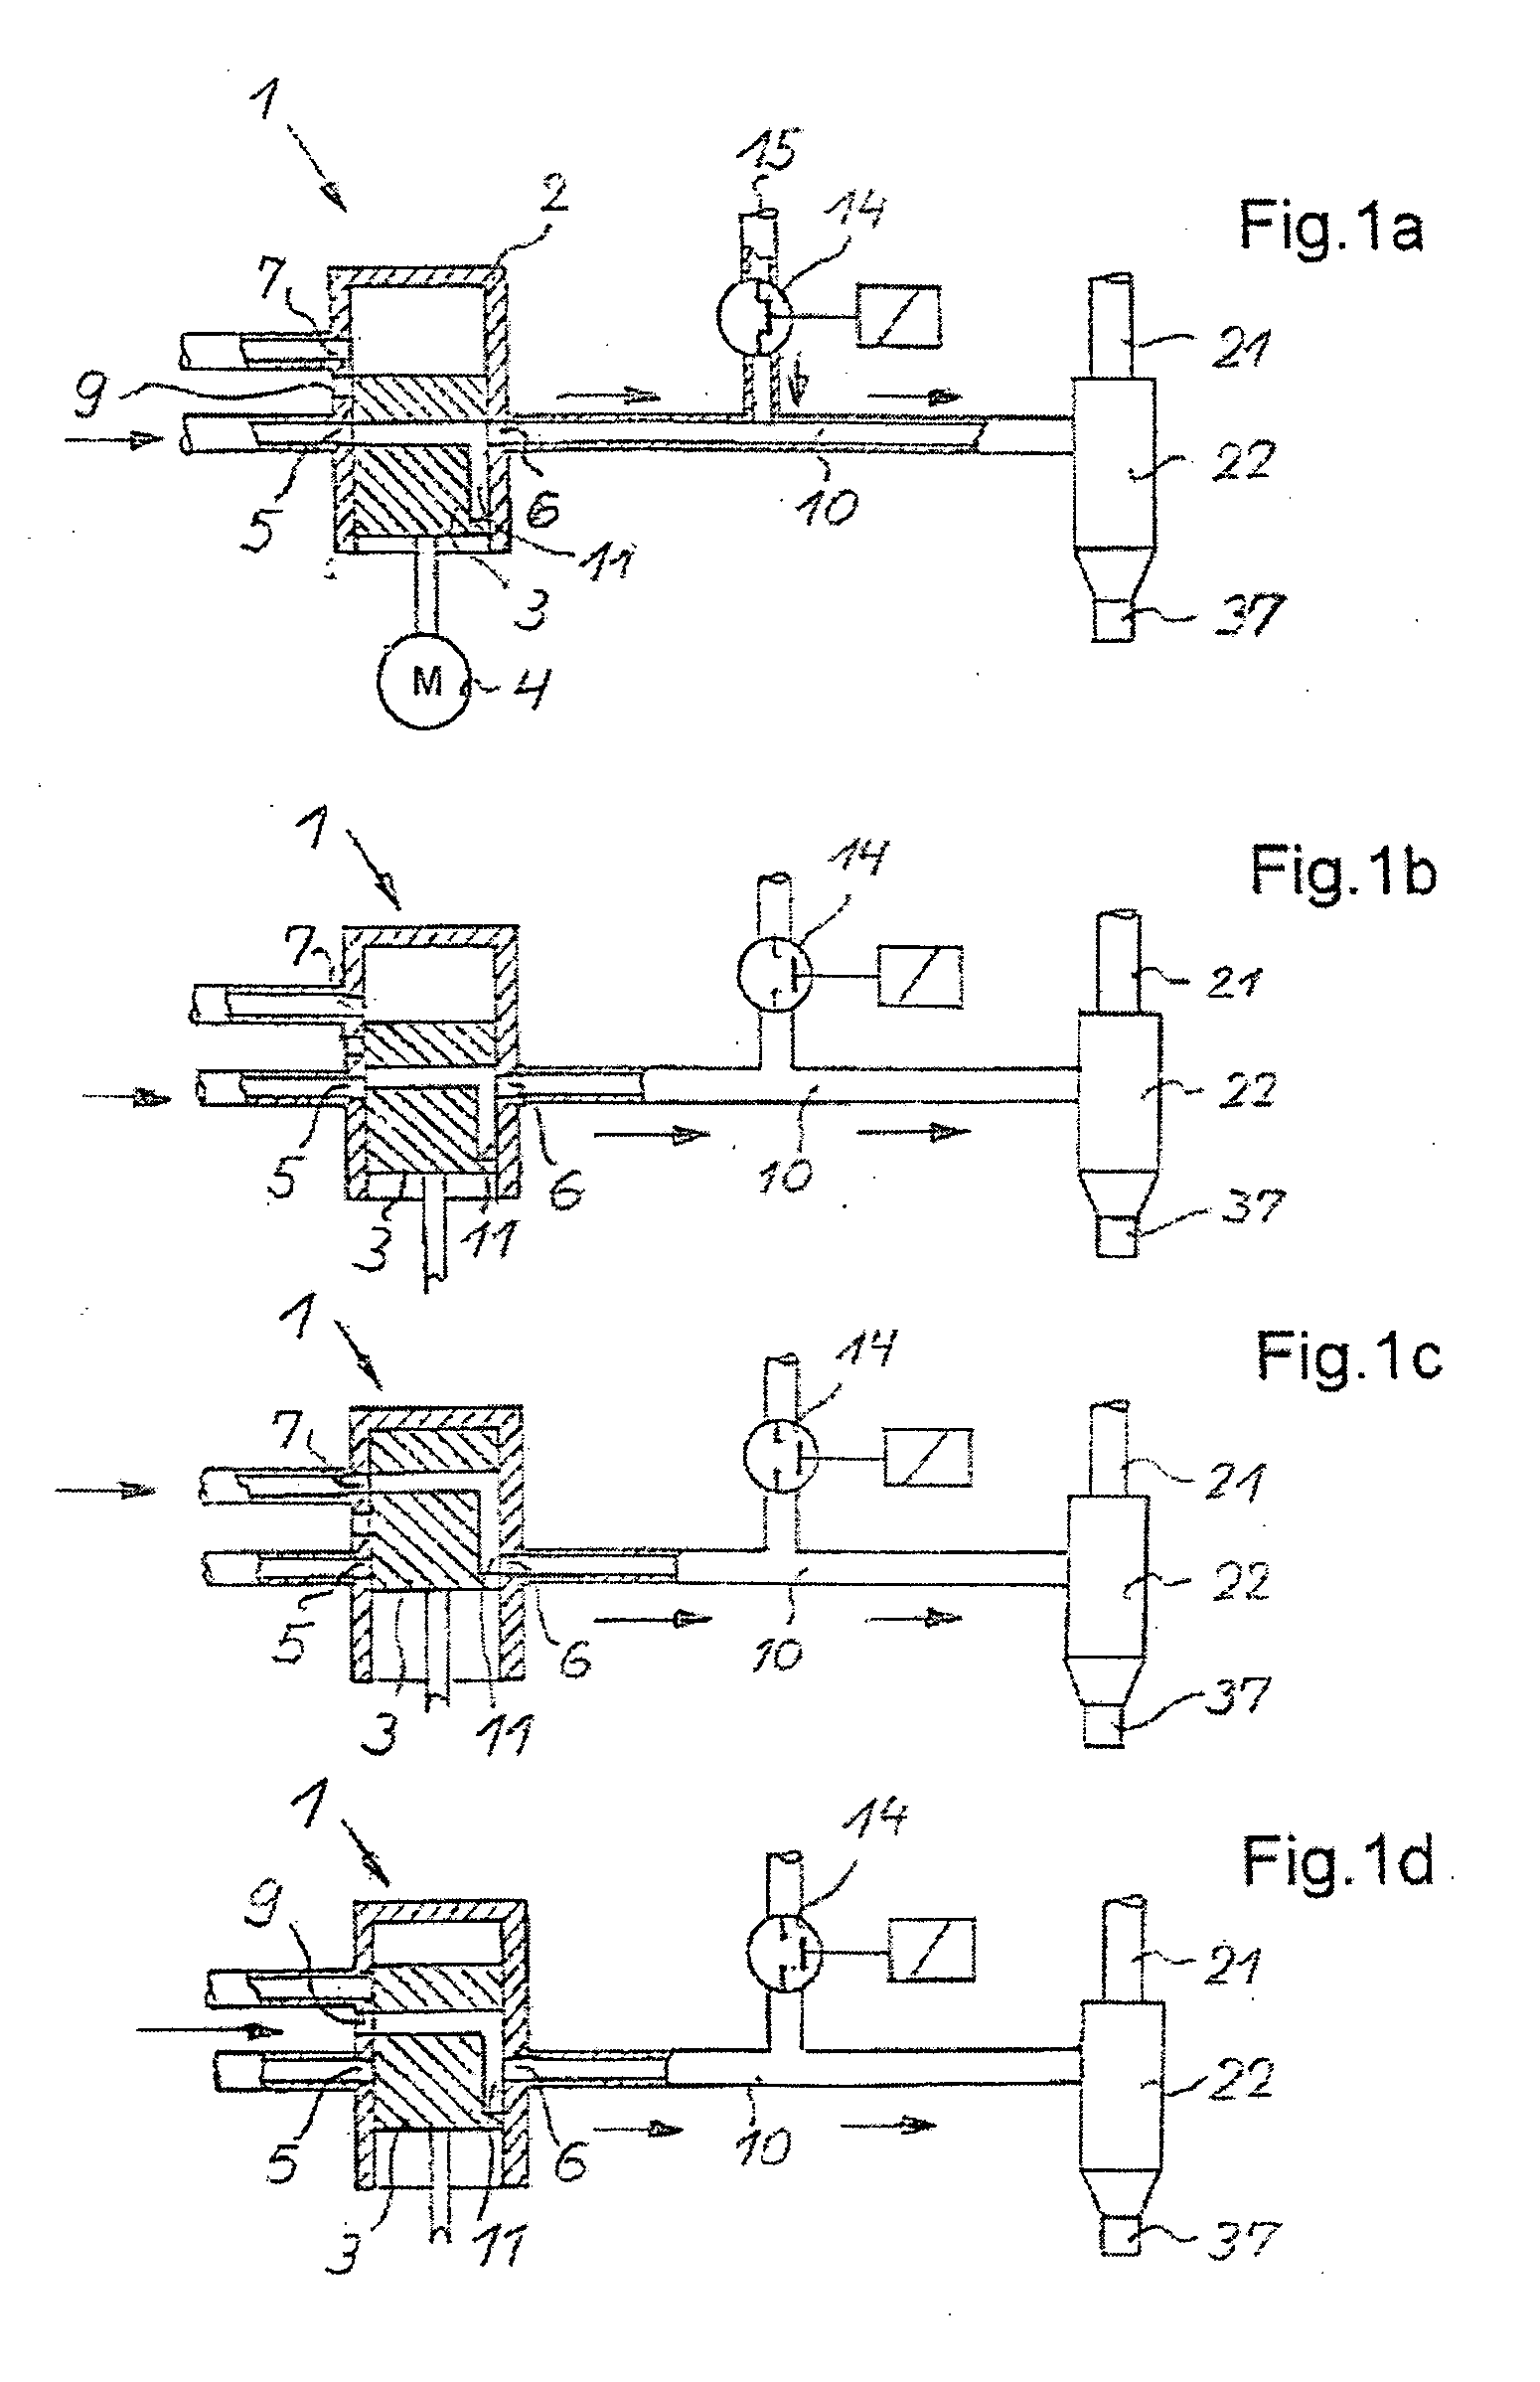 Multi-path valve arrangement in a beverage making unit